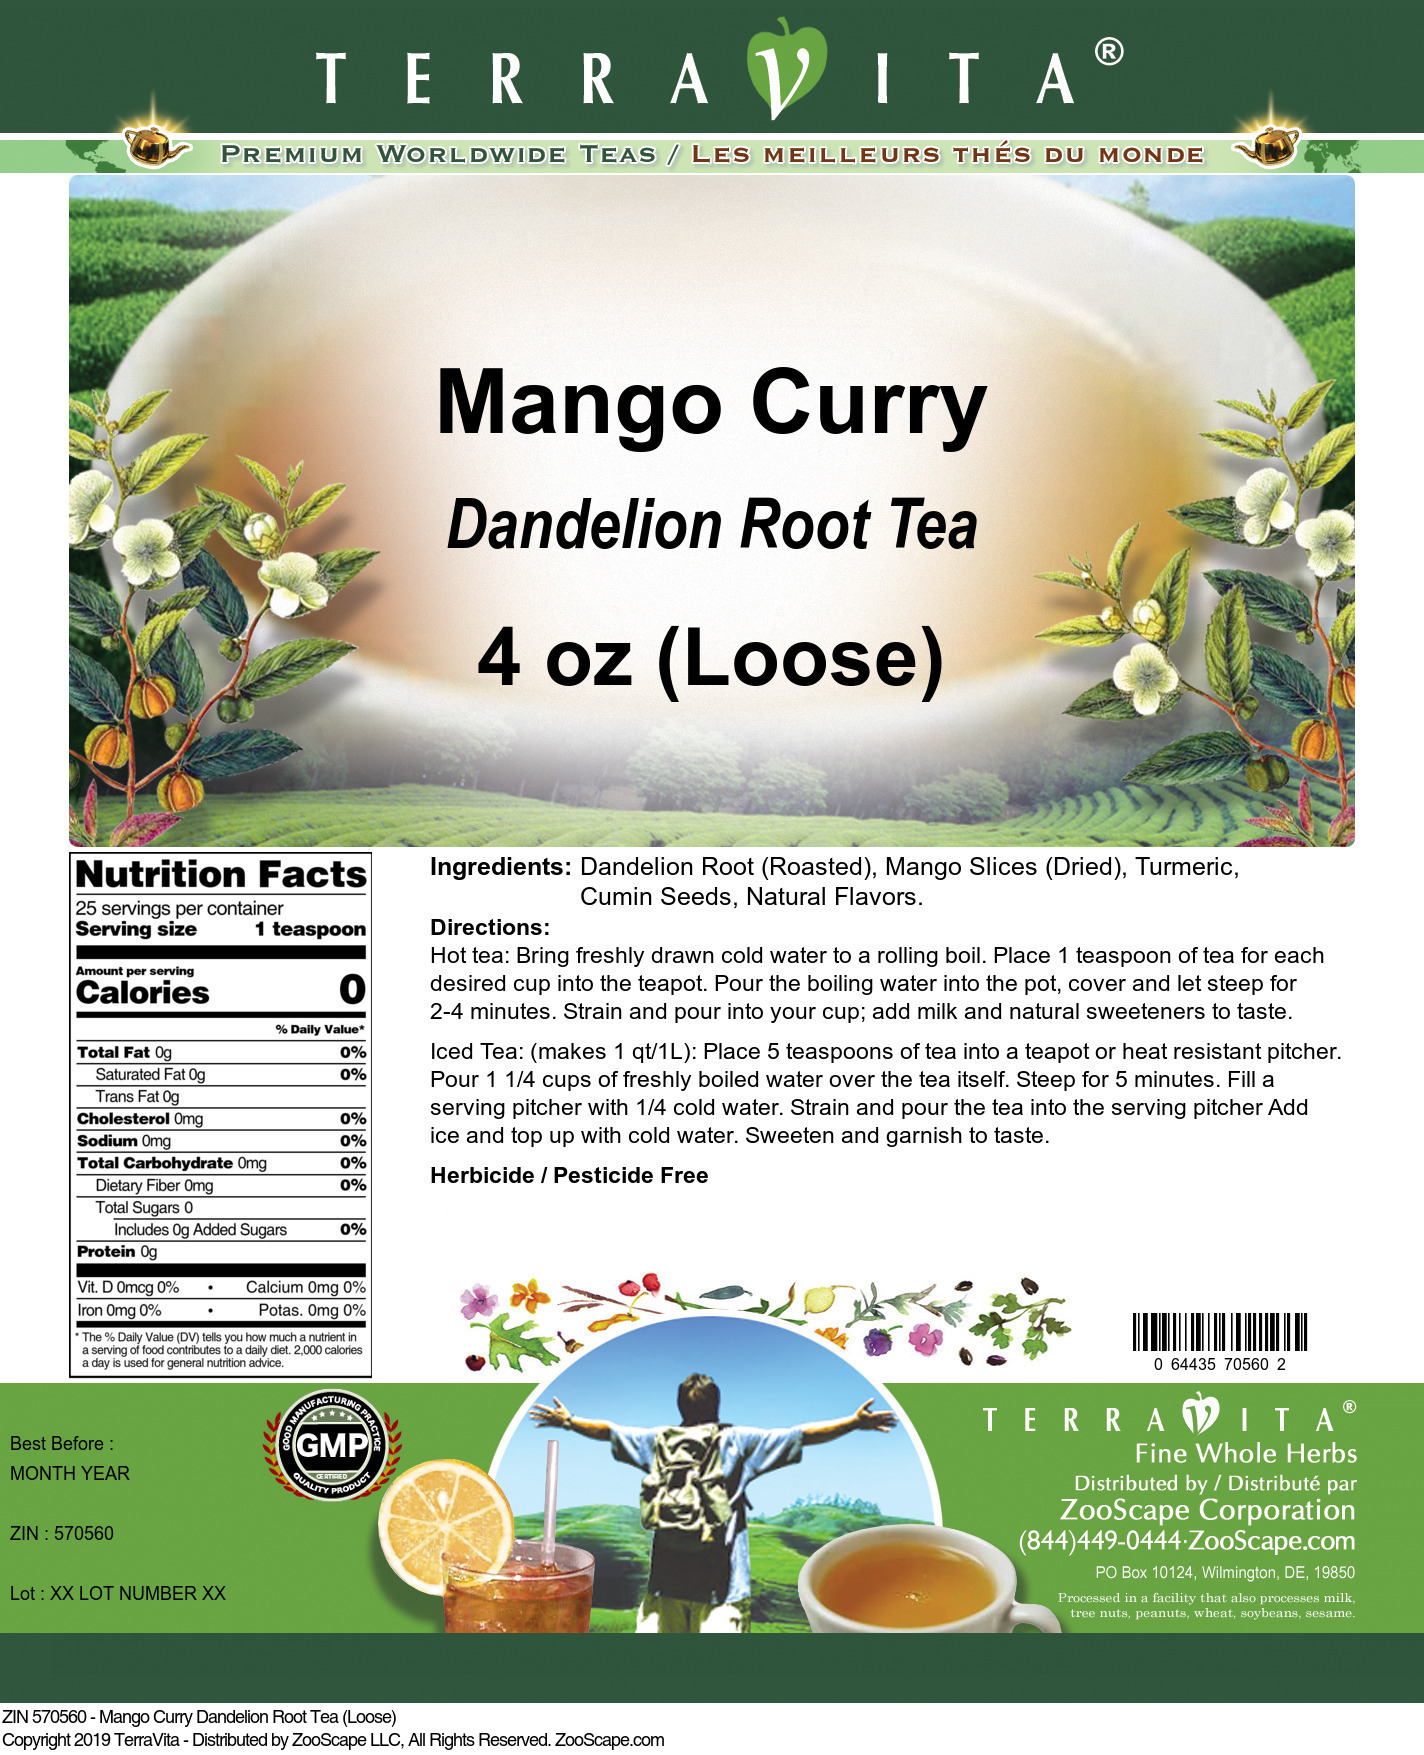 Mango Curry Dandelion Root Tea (Loose) - Label